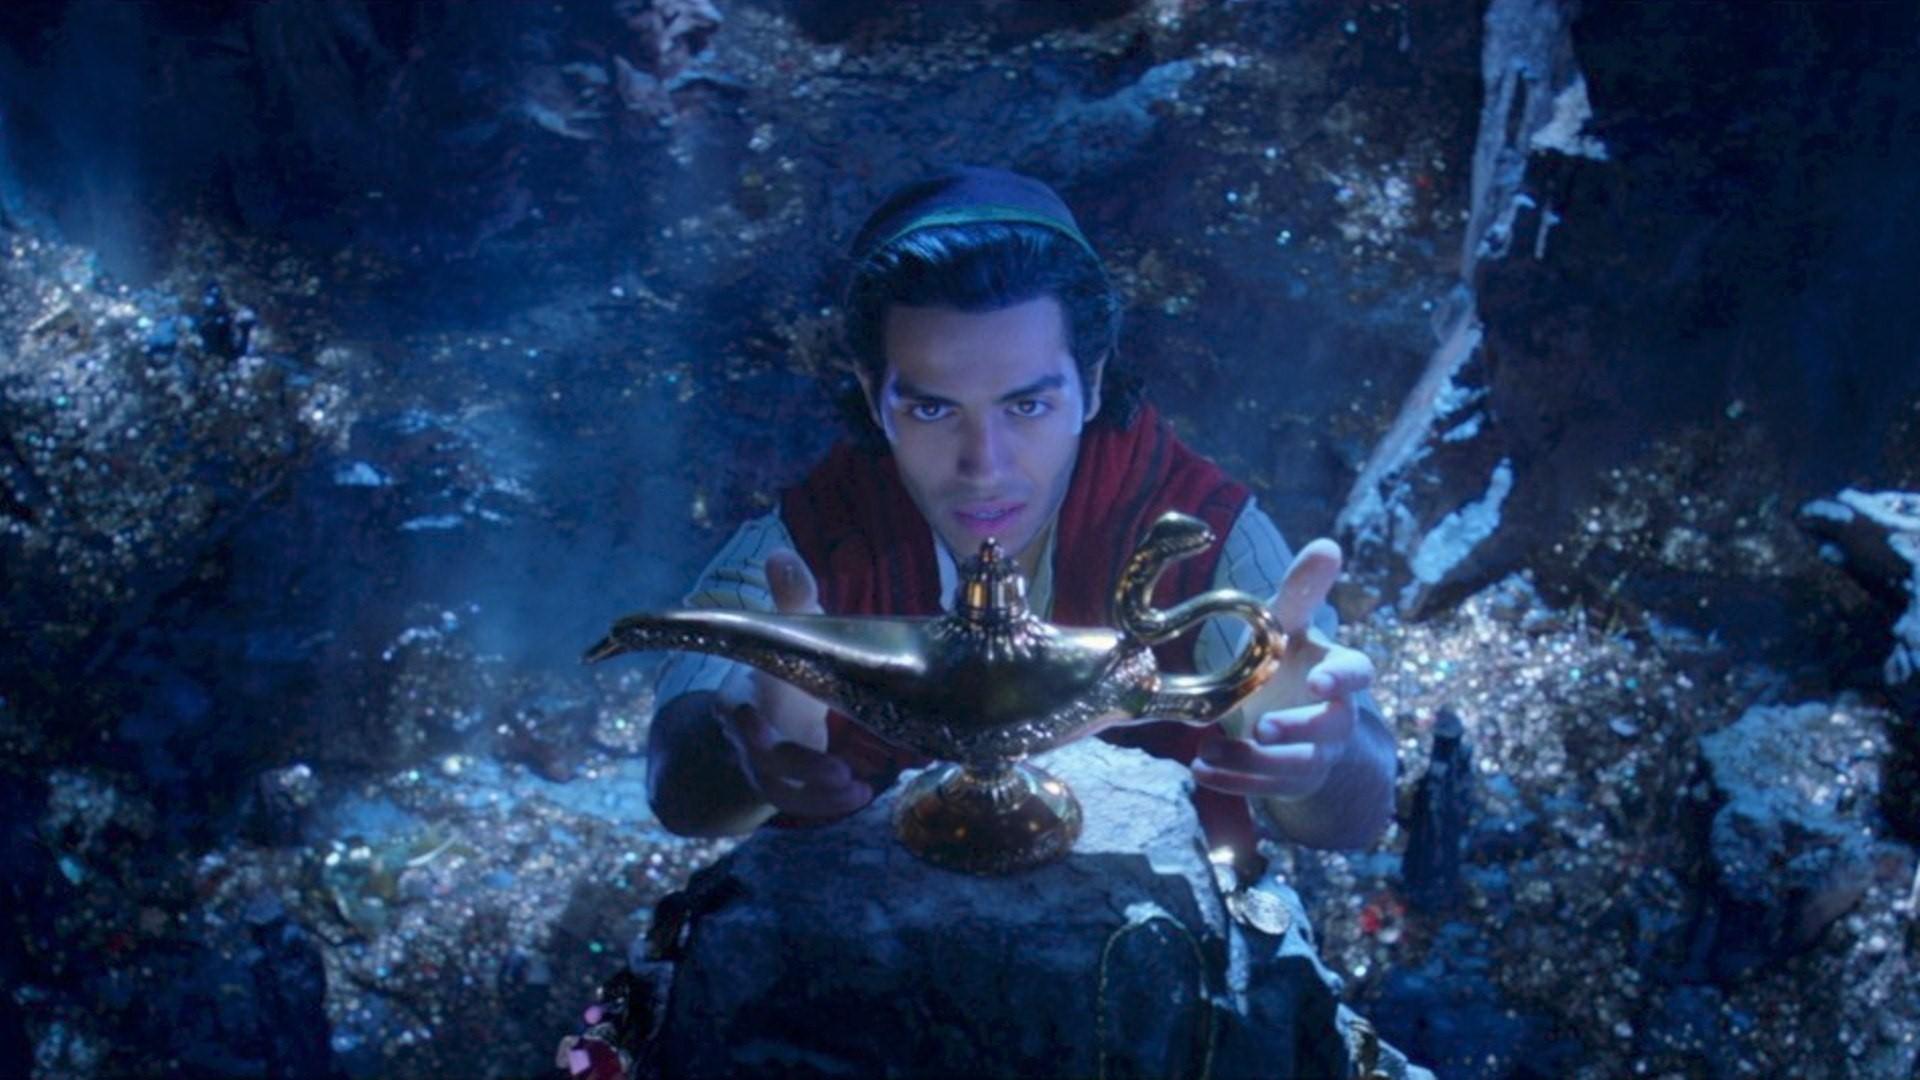 Mena Massoud as Aladdin in 2019 Film Aladdin